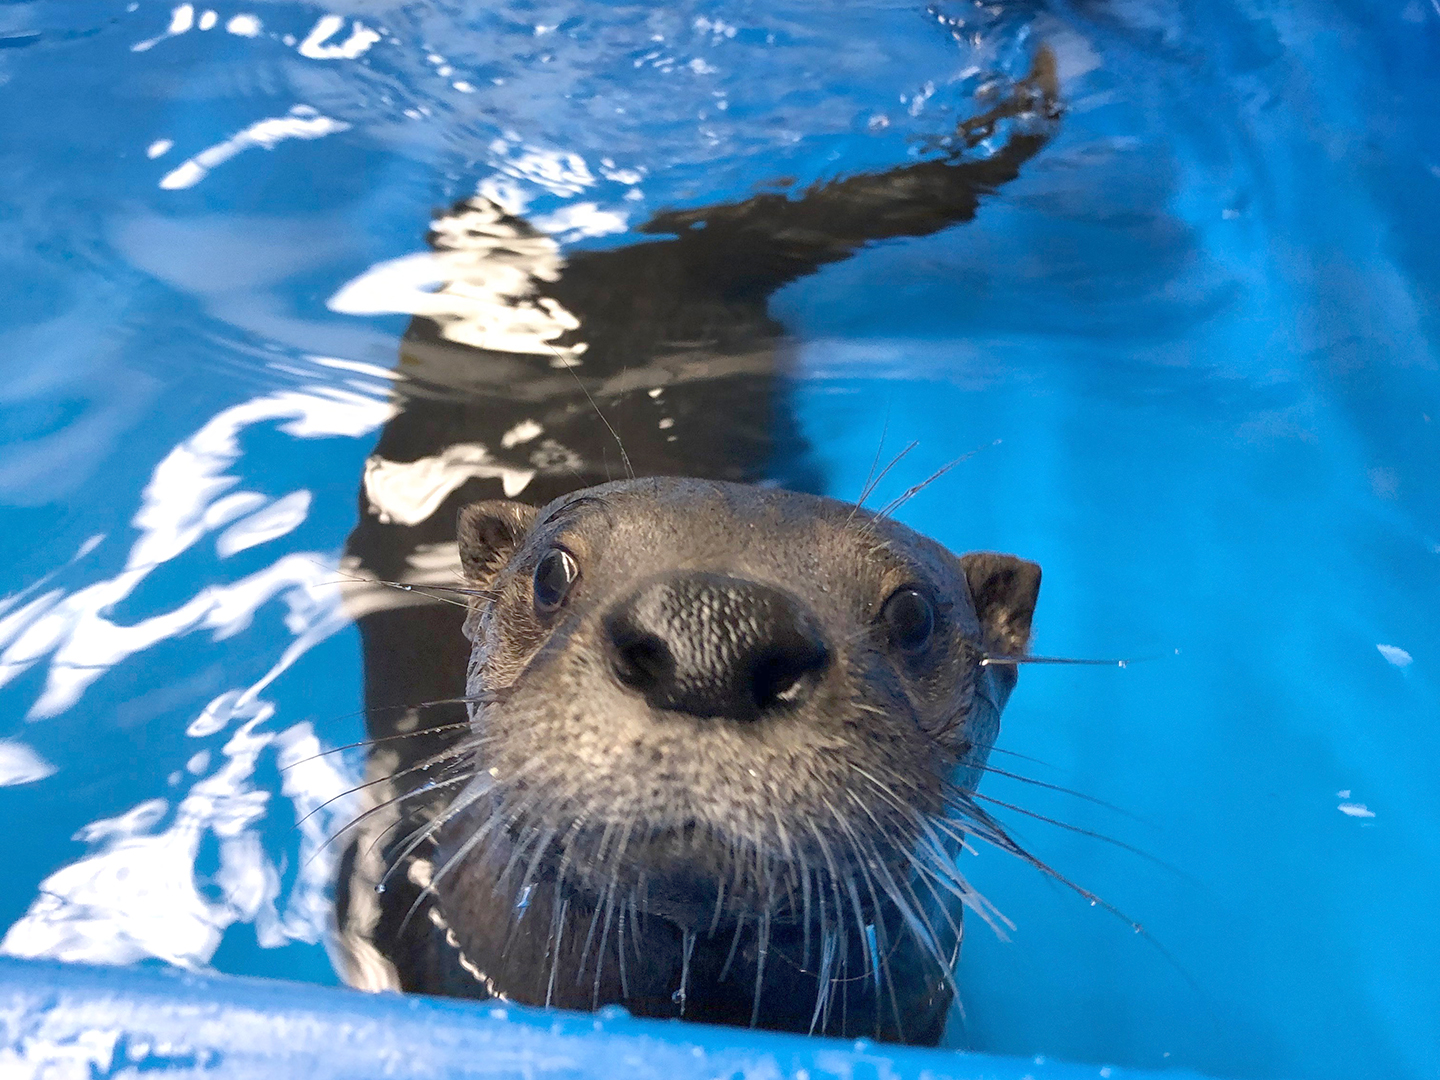 An otter swimming